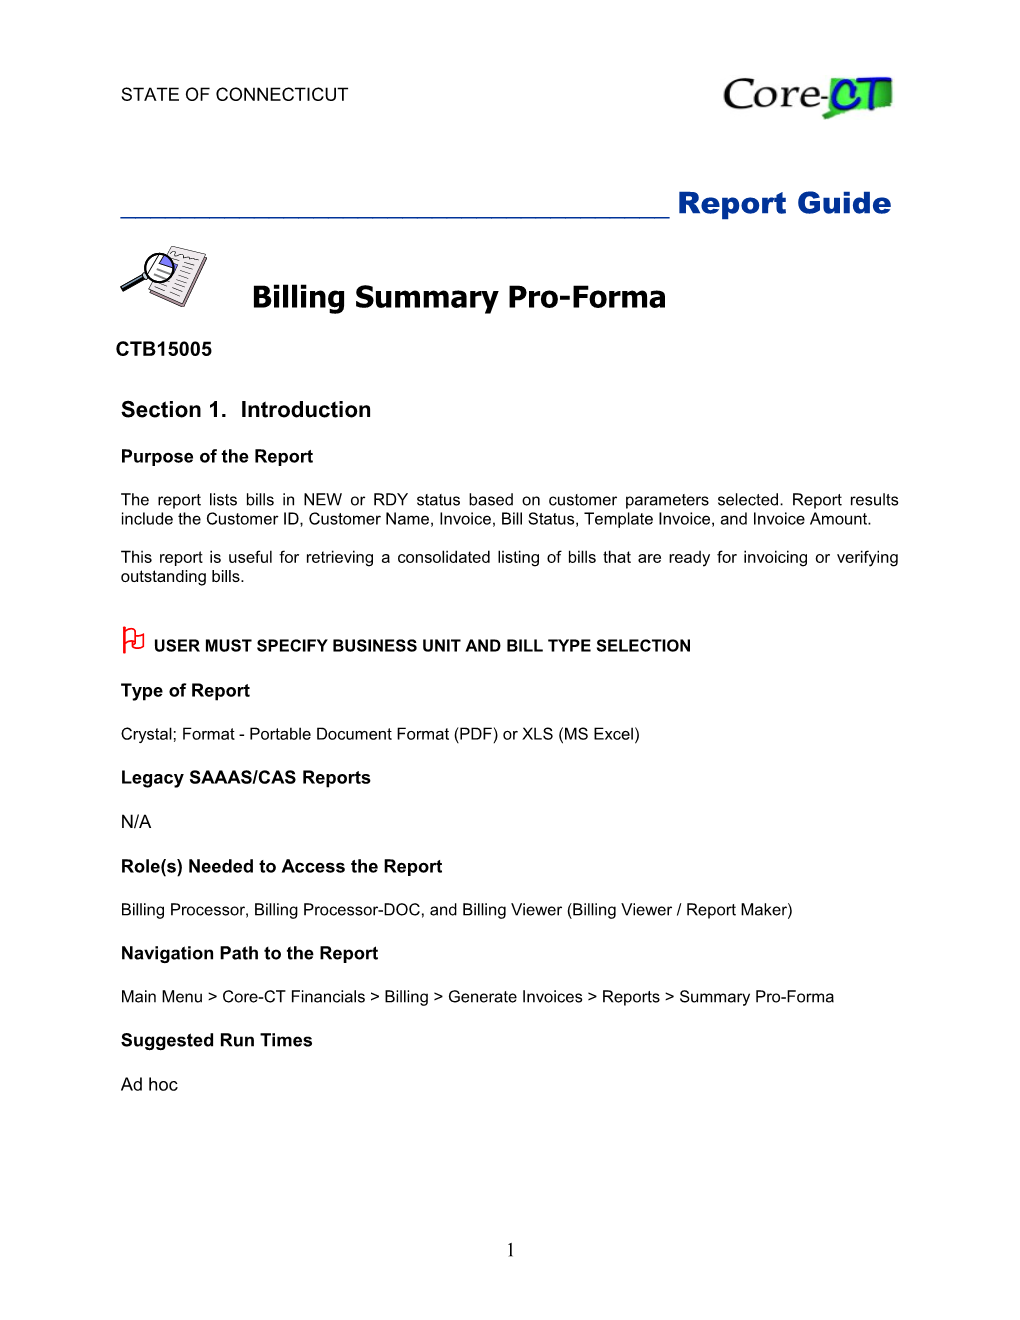 Billing Summary Pro-Forma (Ctb15005)